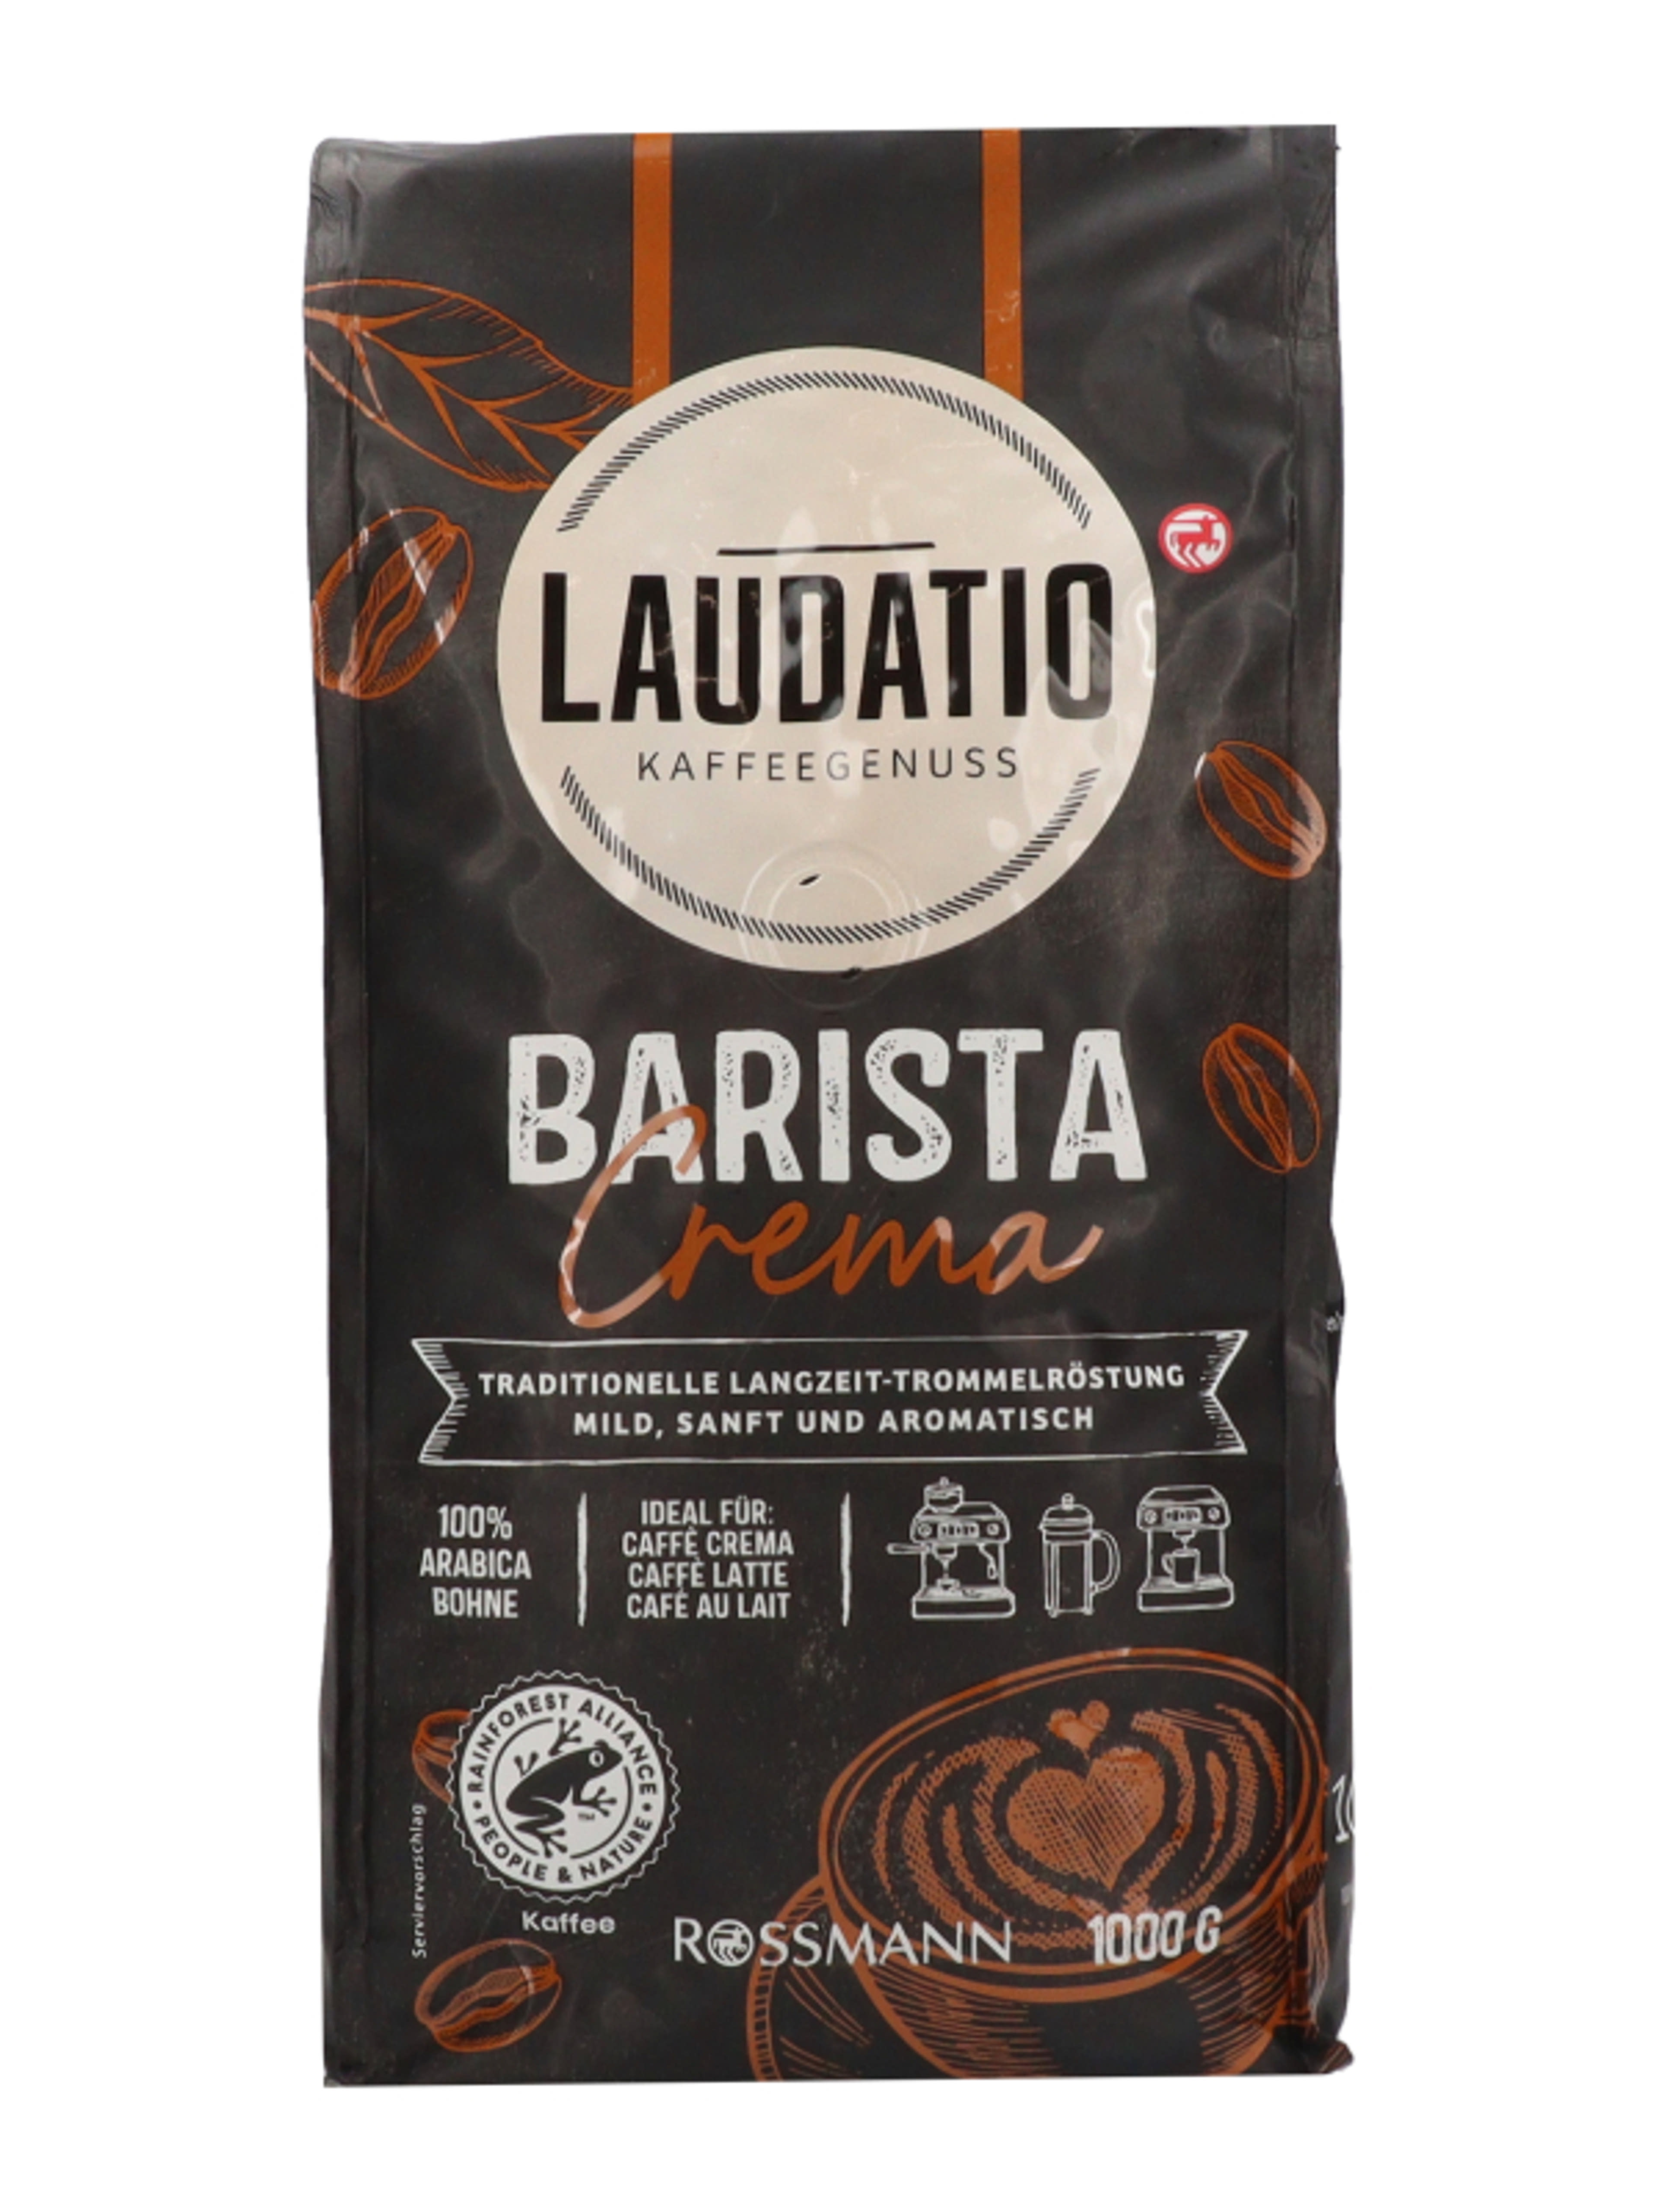 Laudatio Barista szemes kávé - 1000g-3